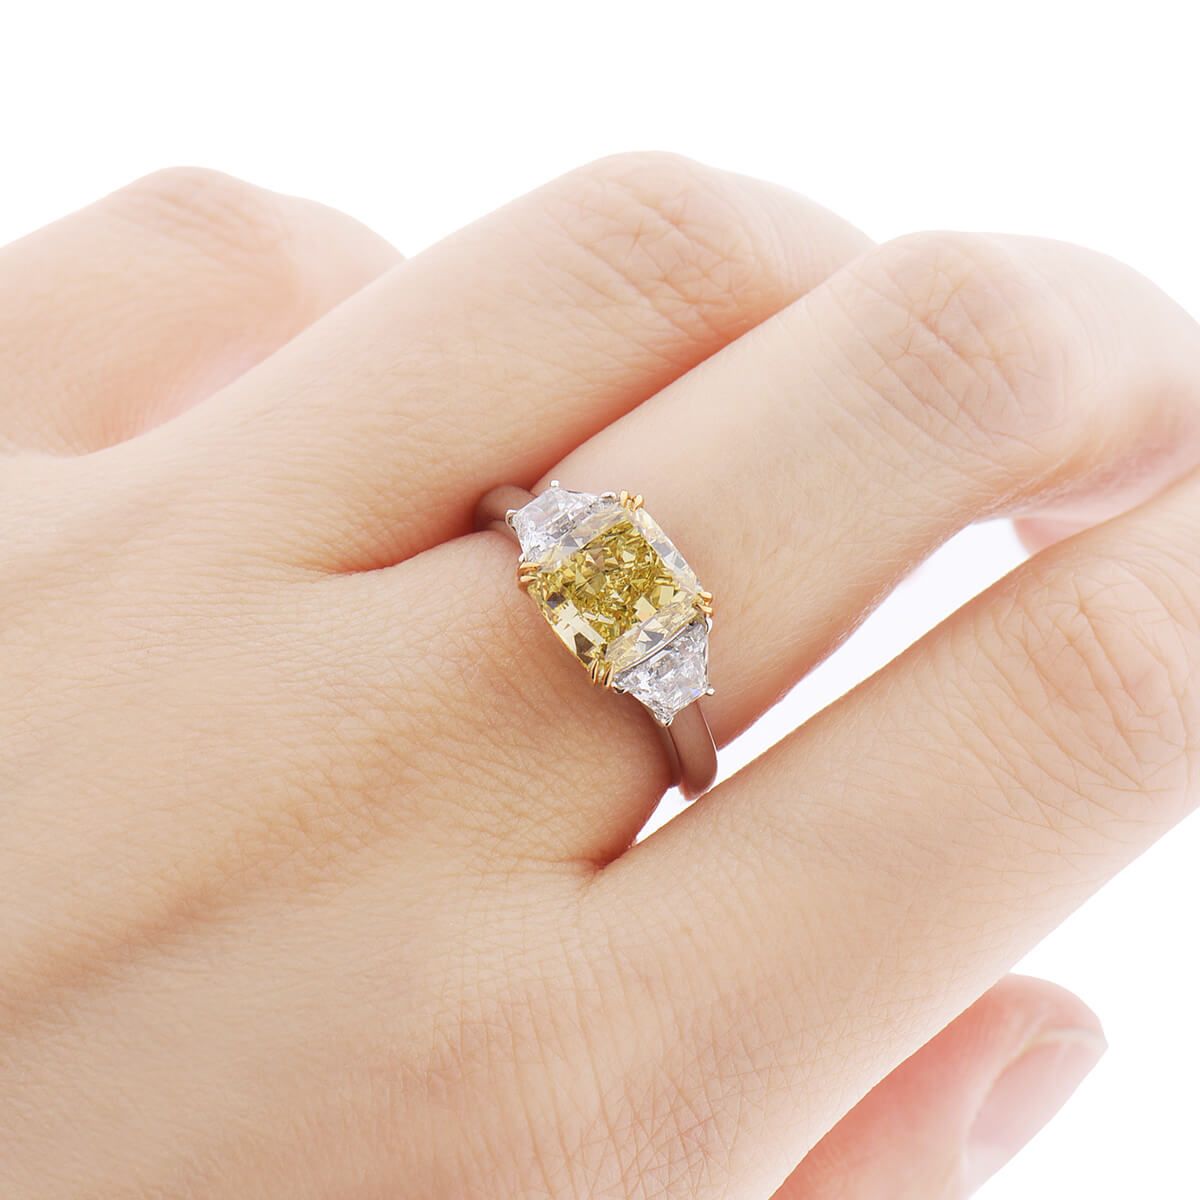 Fancy Vivid Yellow Diamond Ring, 2.60 Ct. (3.37 Ct. TW), Cushion shape, GIA Certified, 5161430482